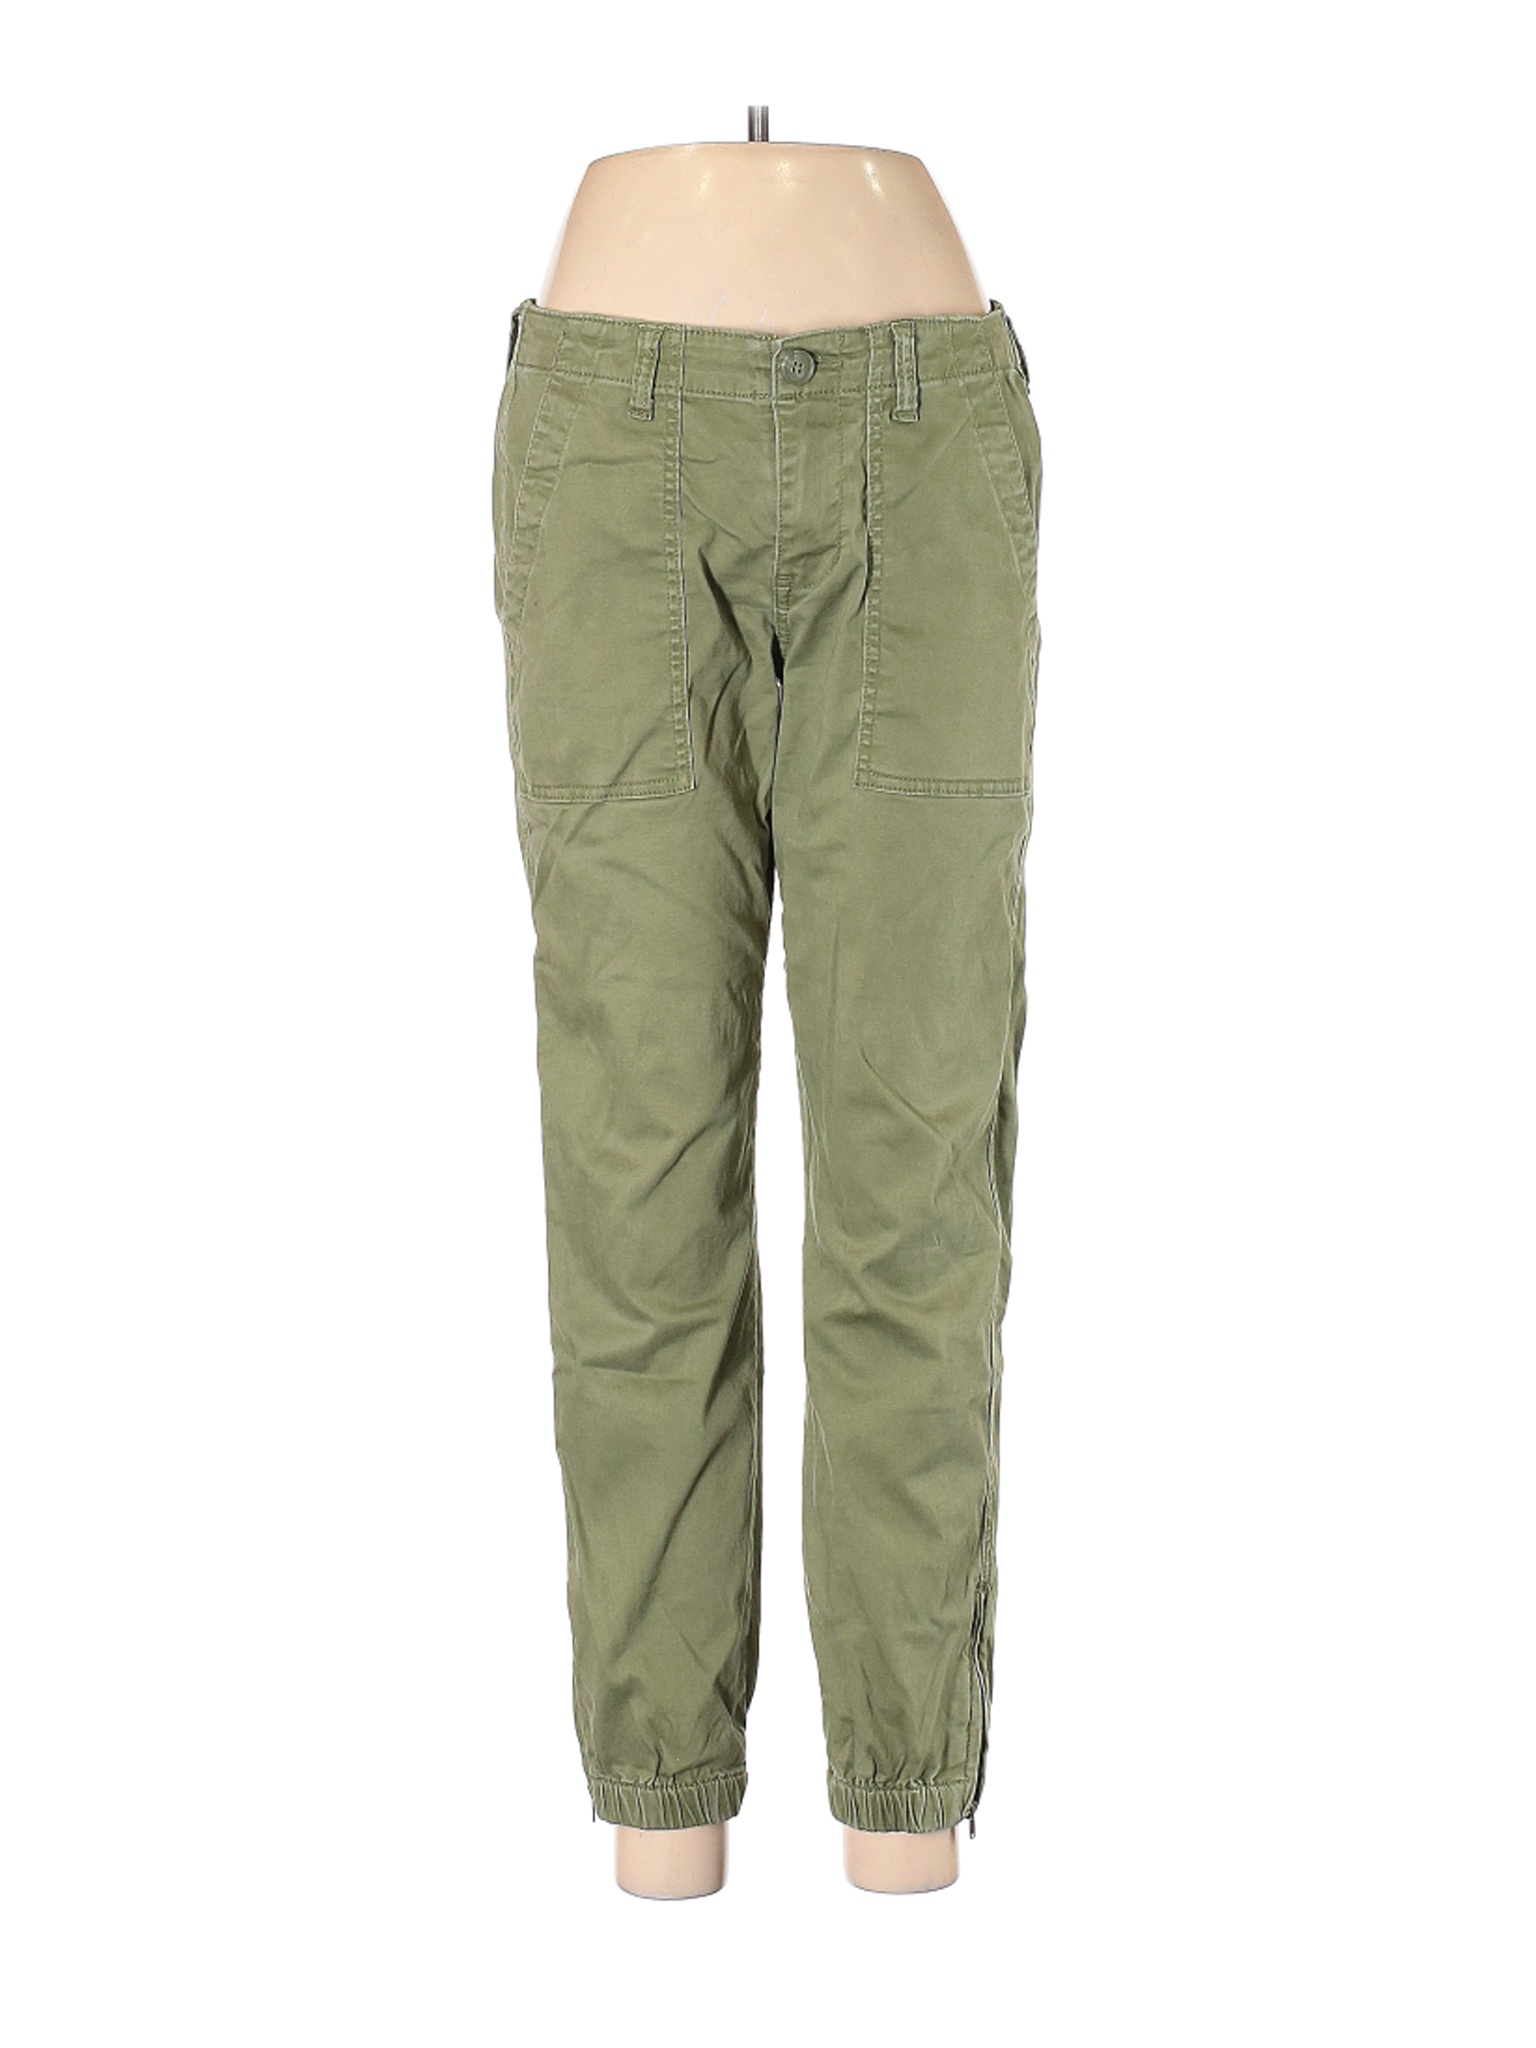 CAbi Women Green Khakis 4 | eBay